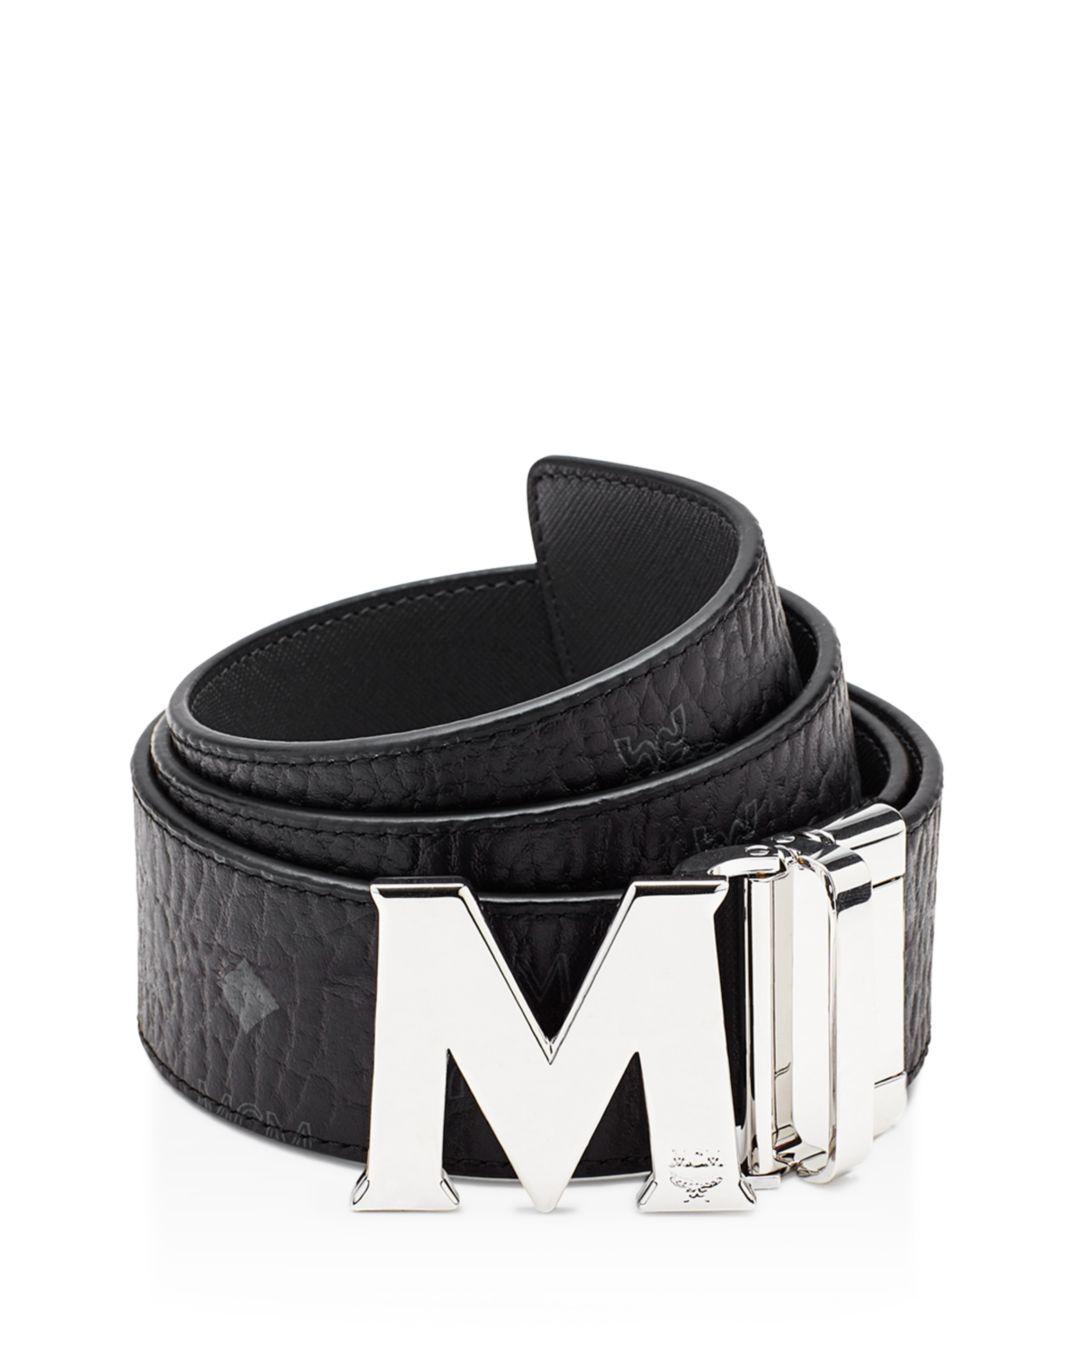 Lyst - MCM Claus Reversible Belt in Black for Men